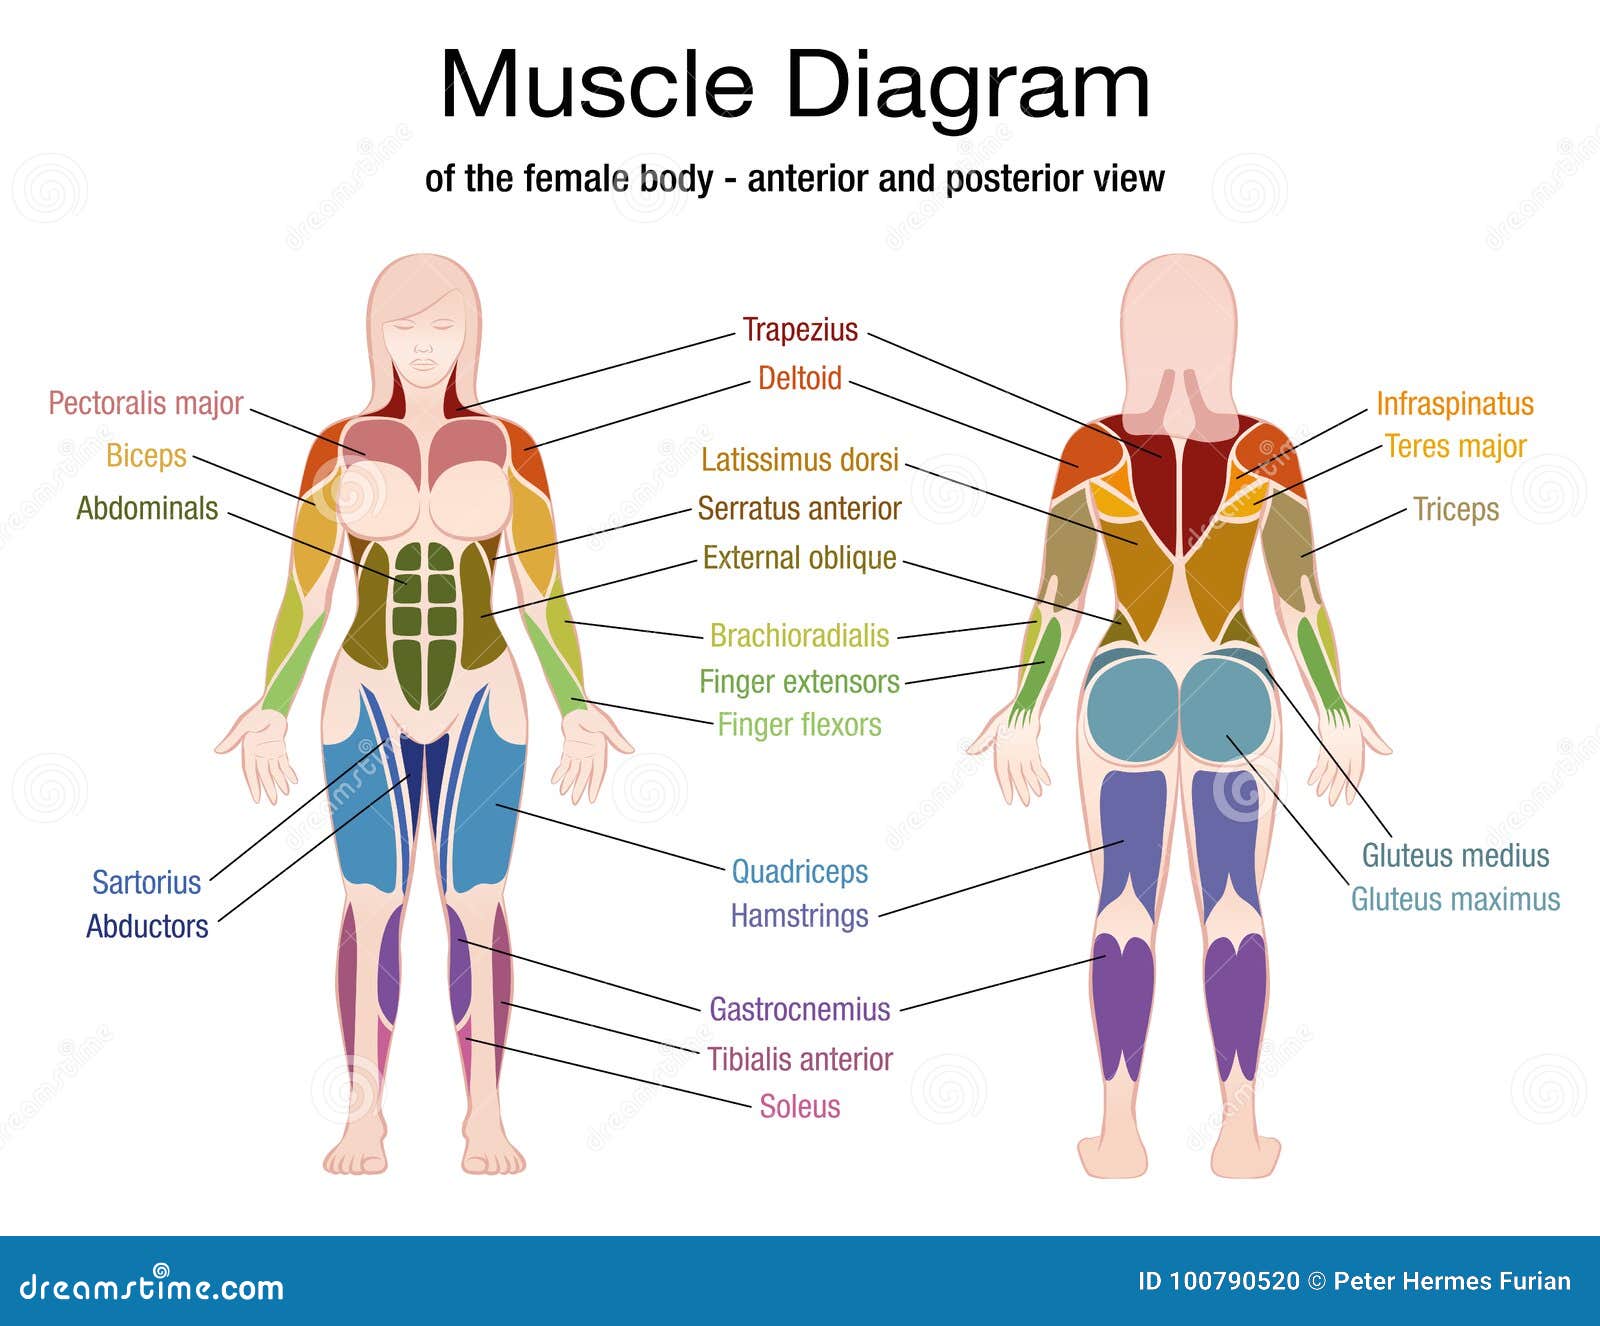 muscle diagram female body names